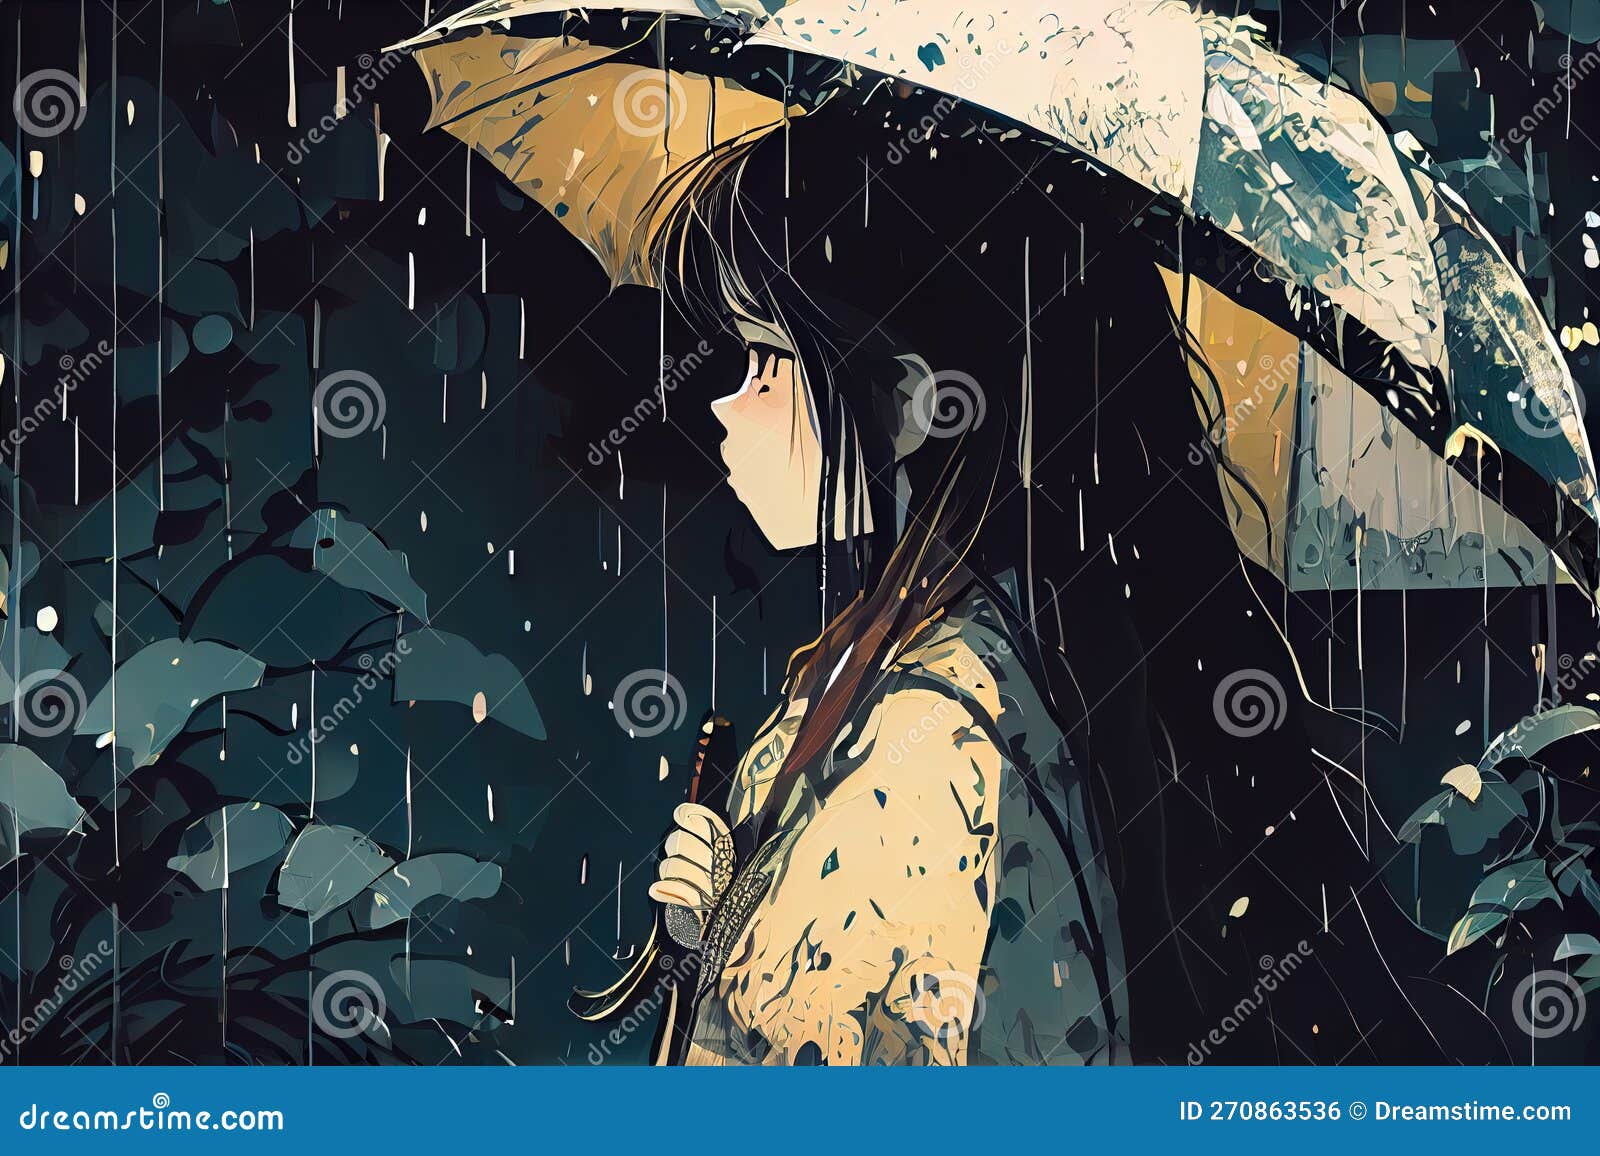 Cute anime girl umbrella standing - AI Photo Generator - starryai